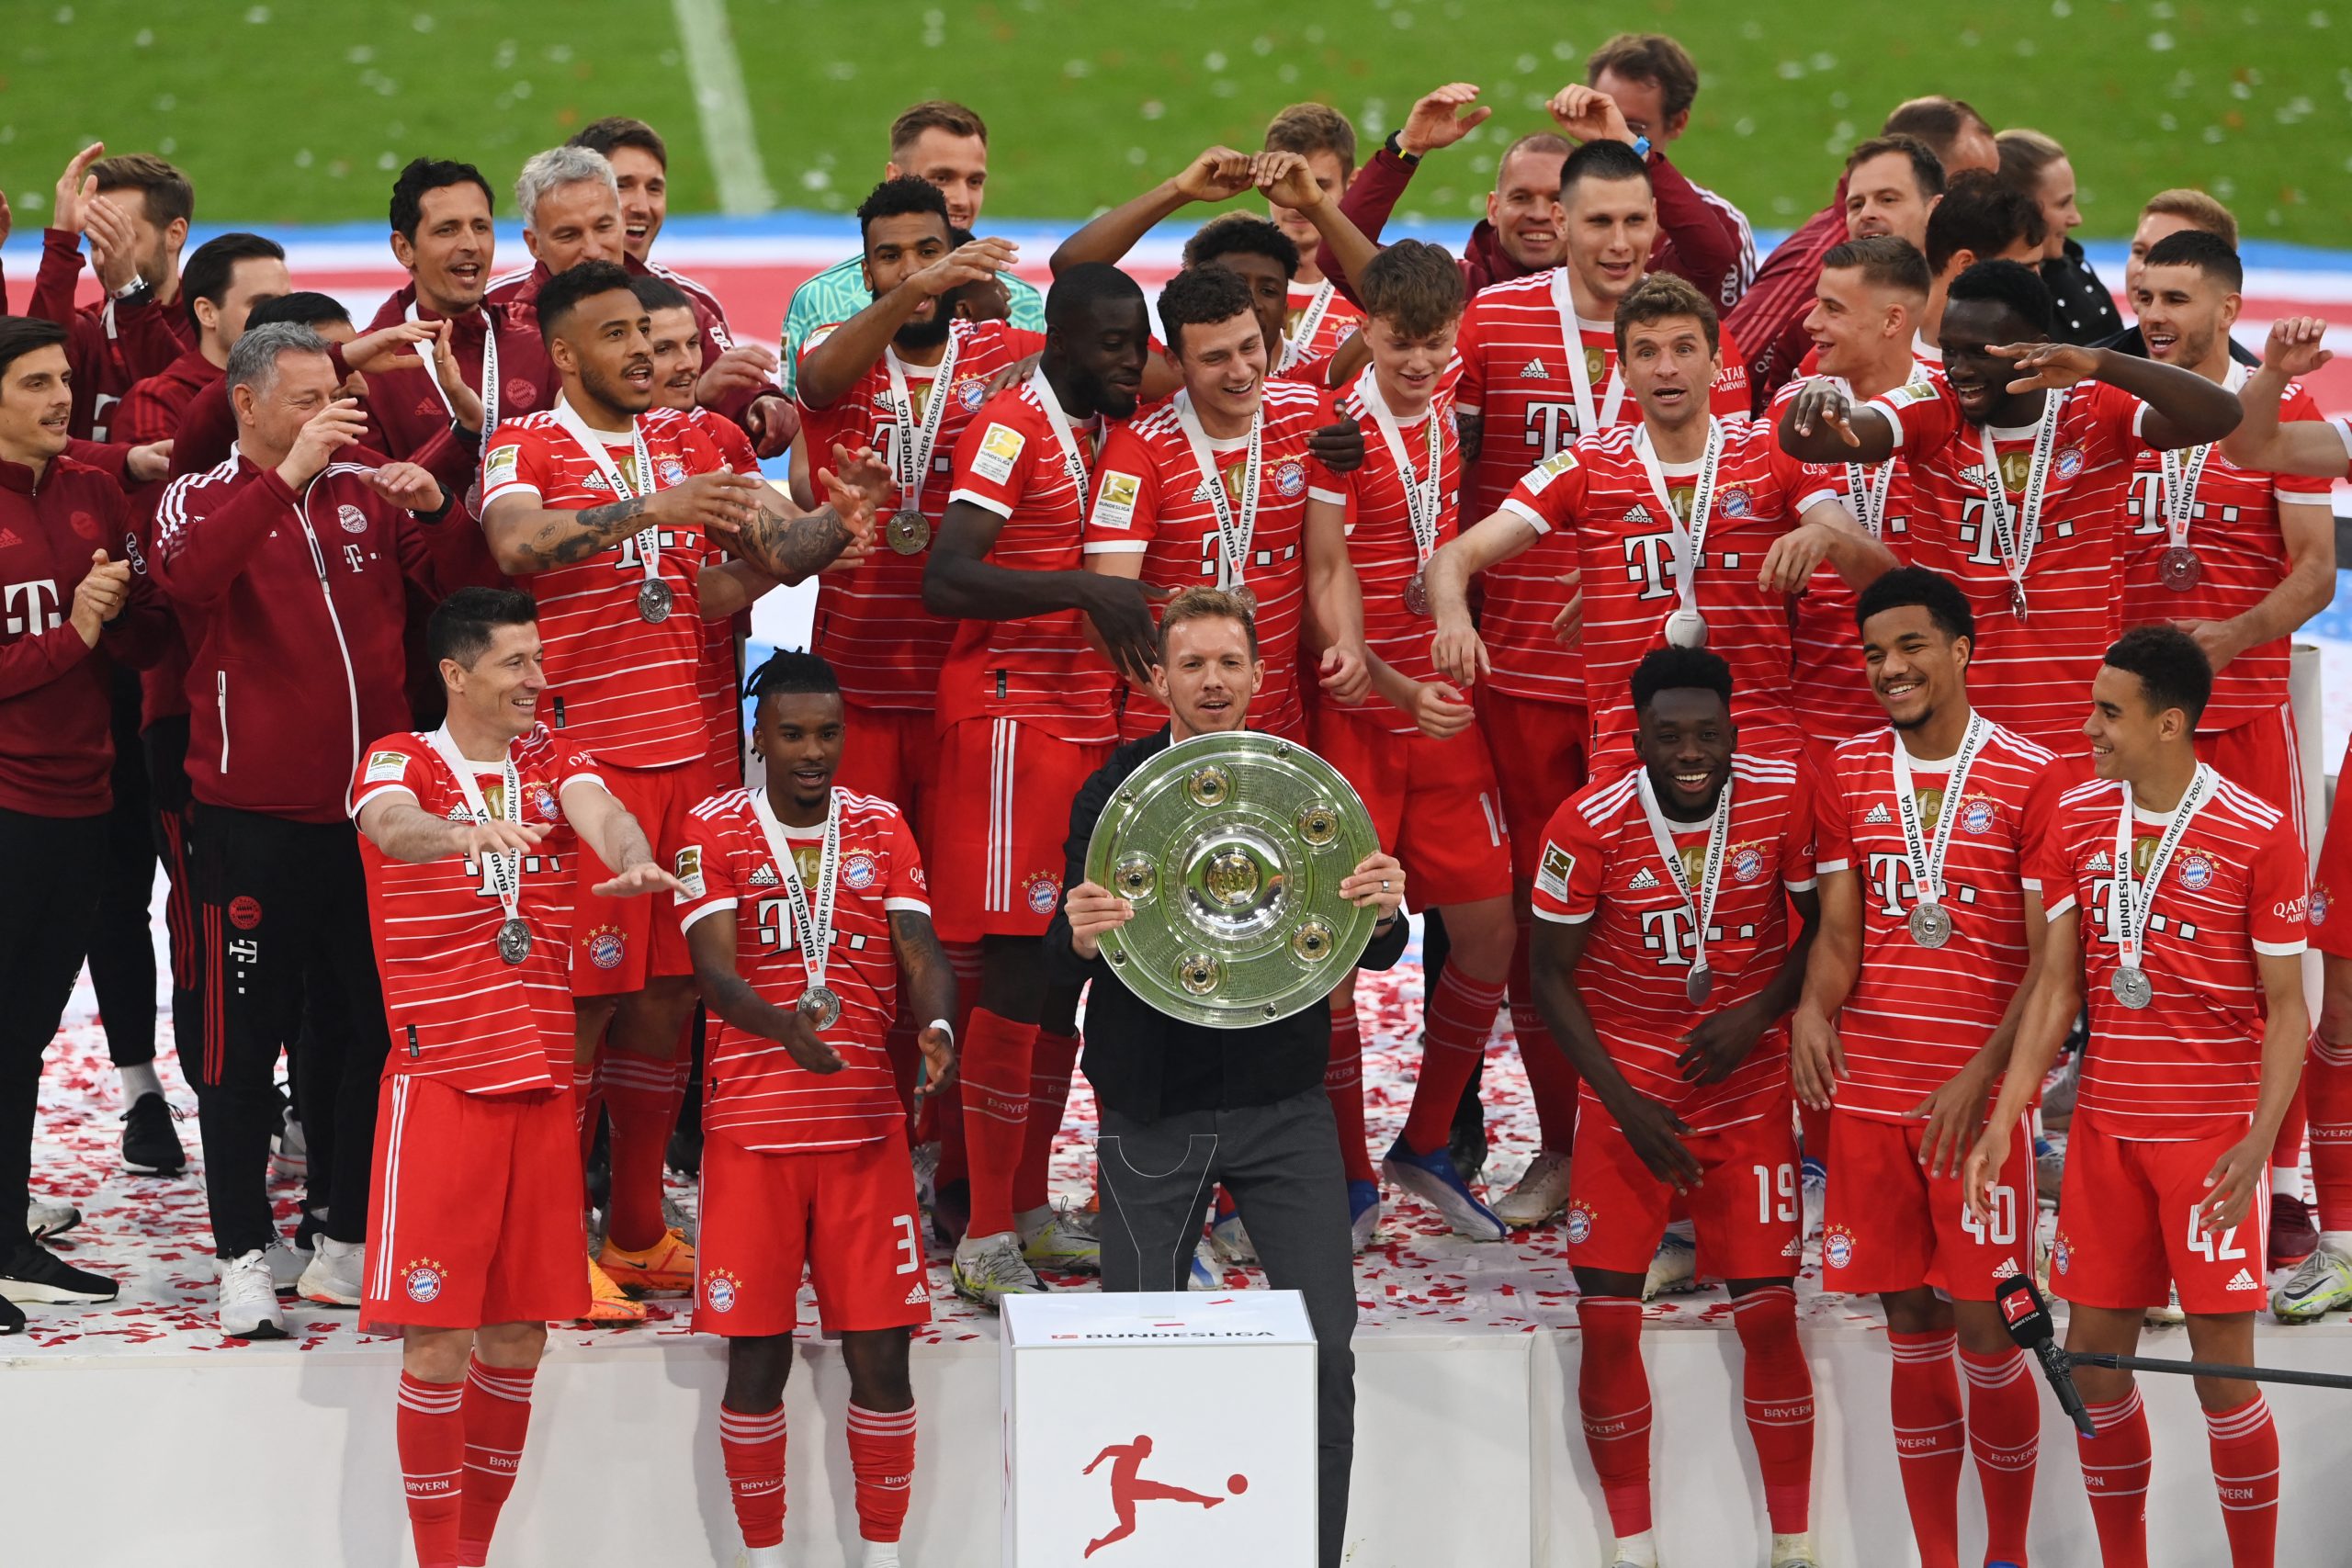 Season opener: Champions Bayern visit Eintracht Frankfurt